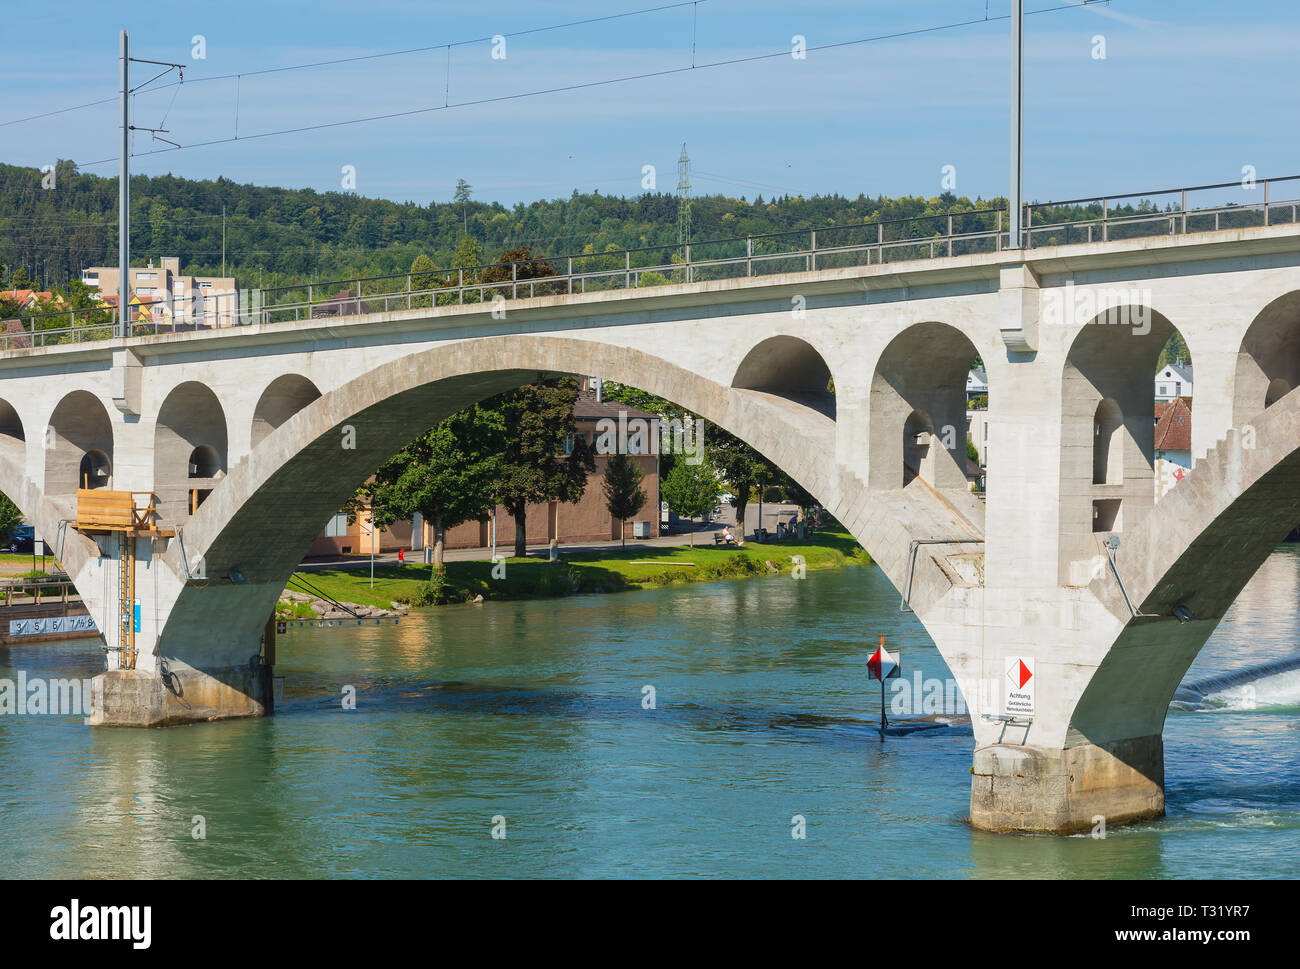 Bremgarten, Switzerland - June 16, 2018: bridge over the Reuss river in the town of Bremgarten. Bremgarten is a municipality in the Swiss canton of Aa Stock Photo